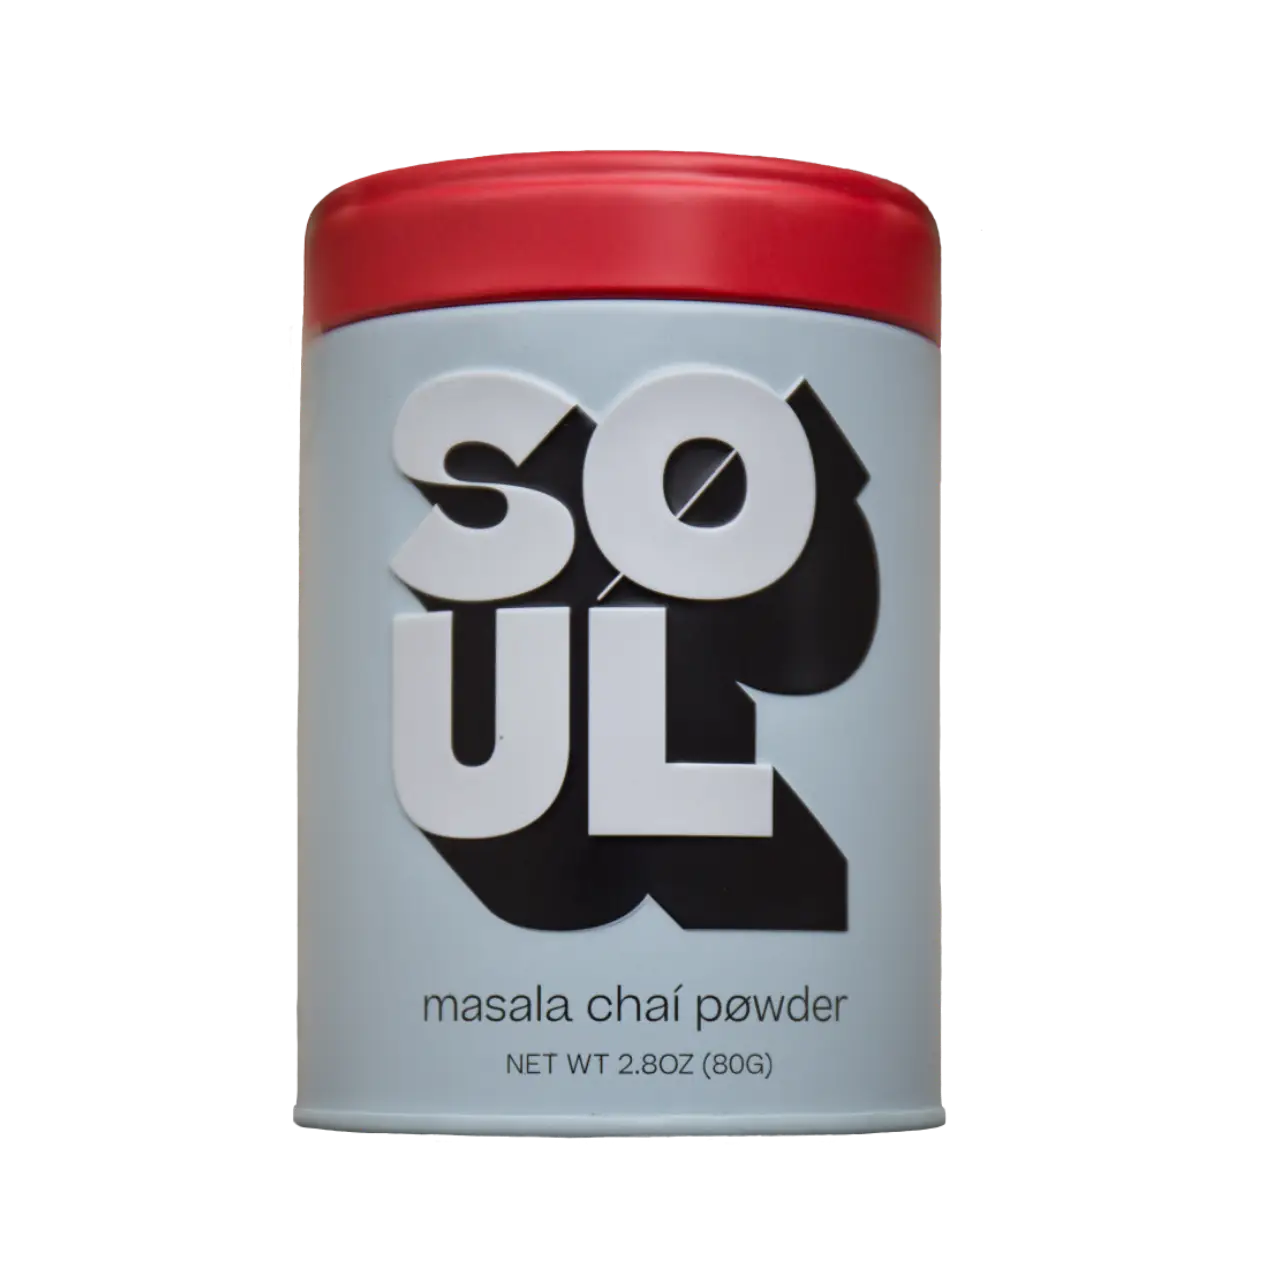 Masala Chai Powder by Søul Chaì